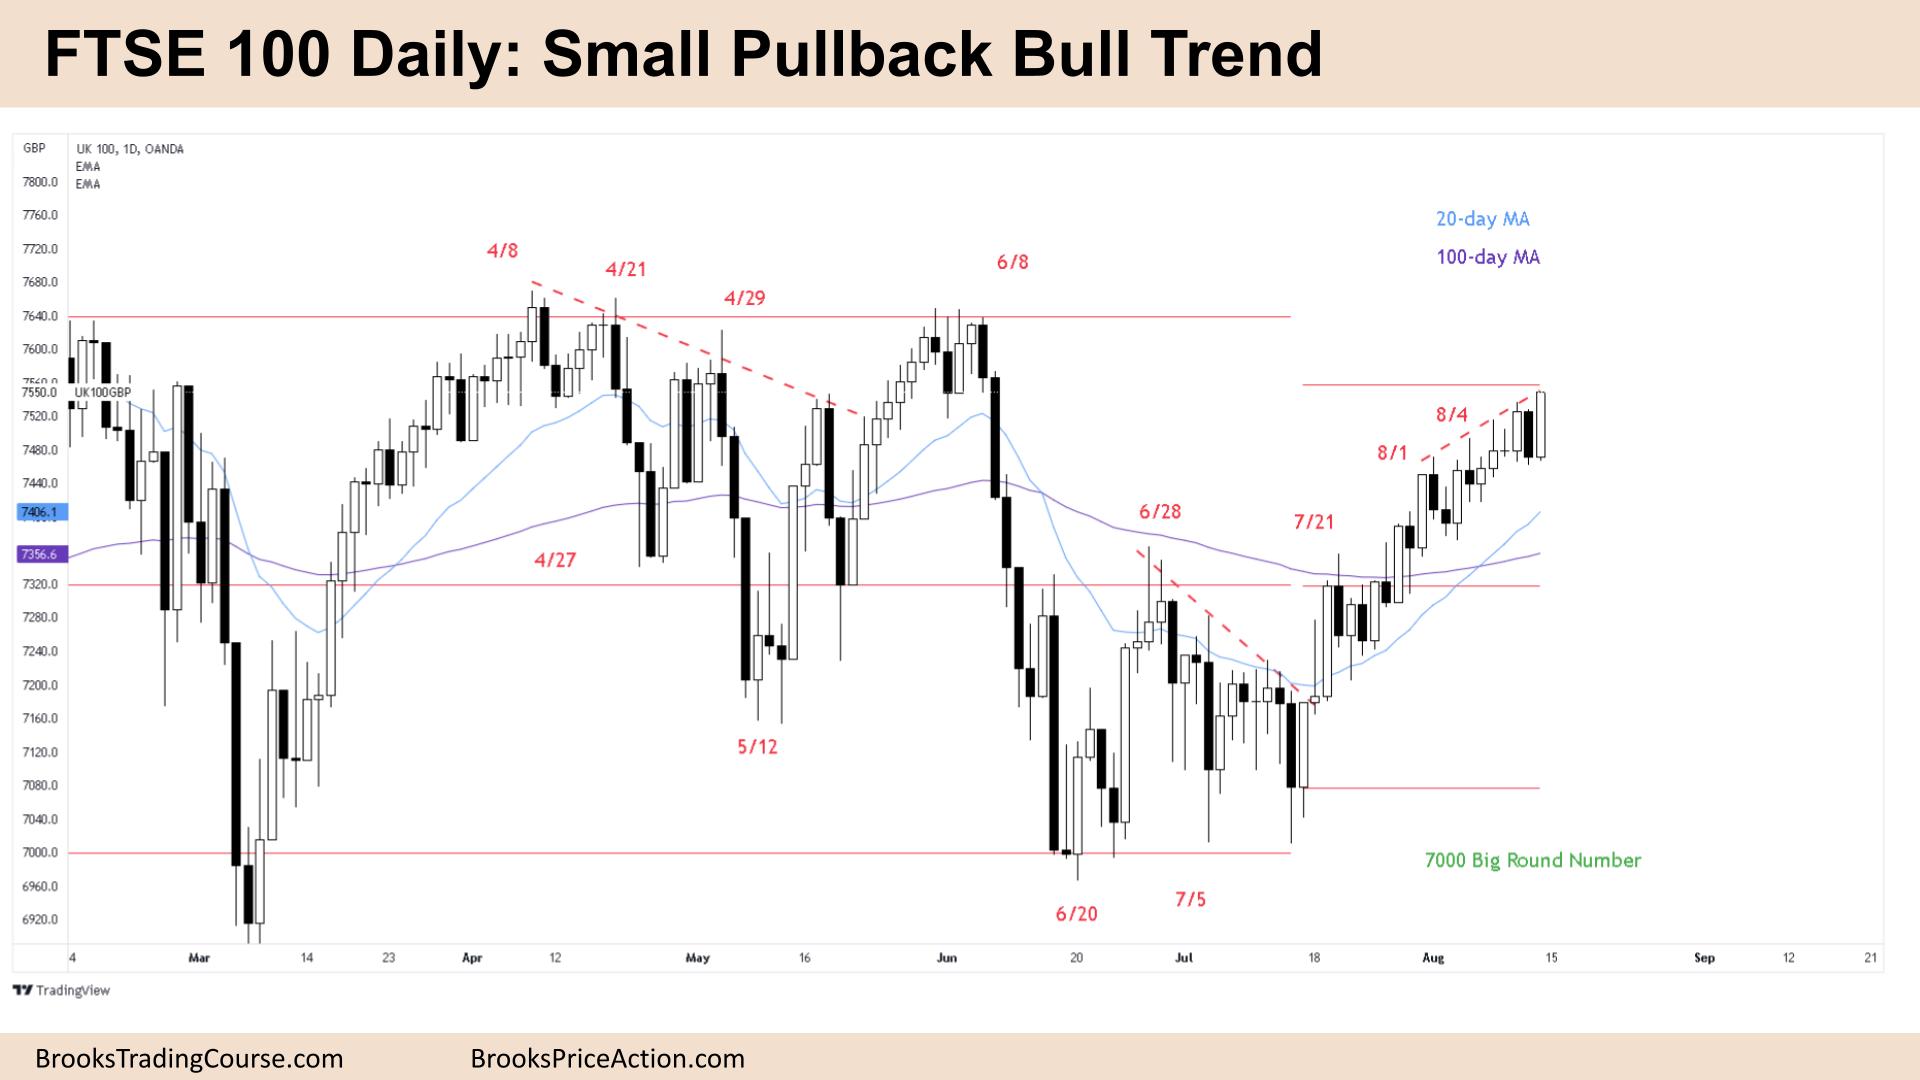 FTSE 100 Small Pullback Bull Trend